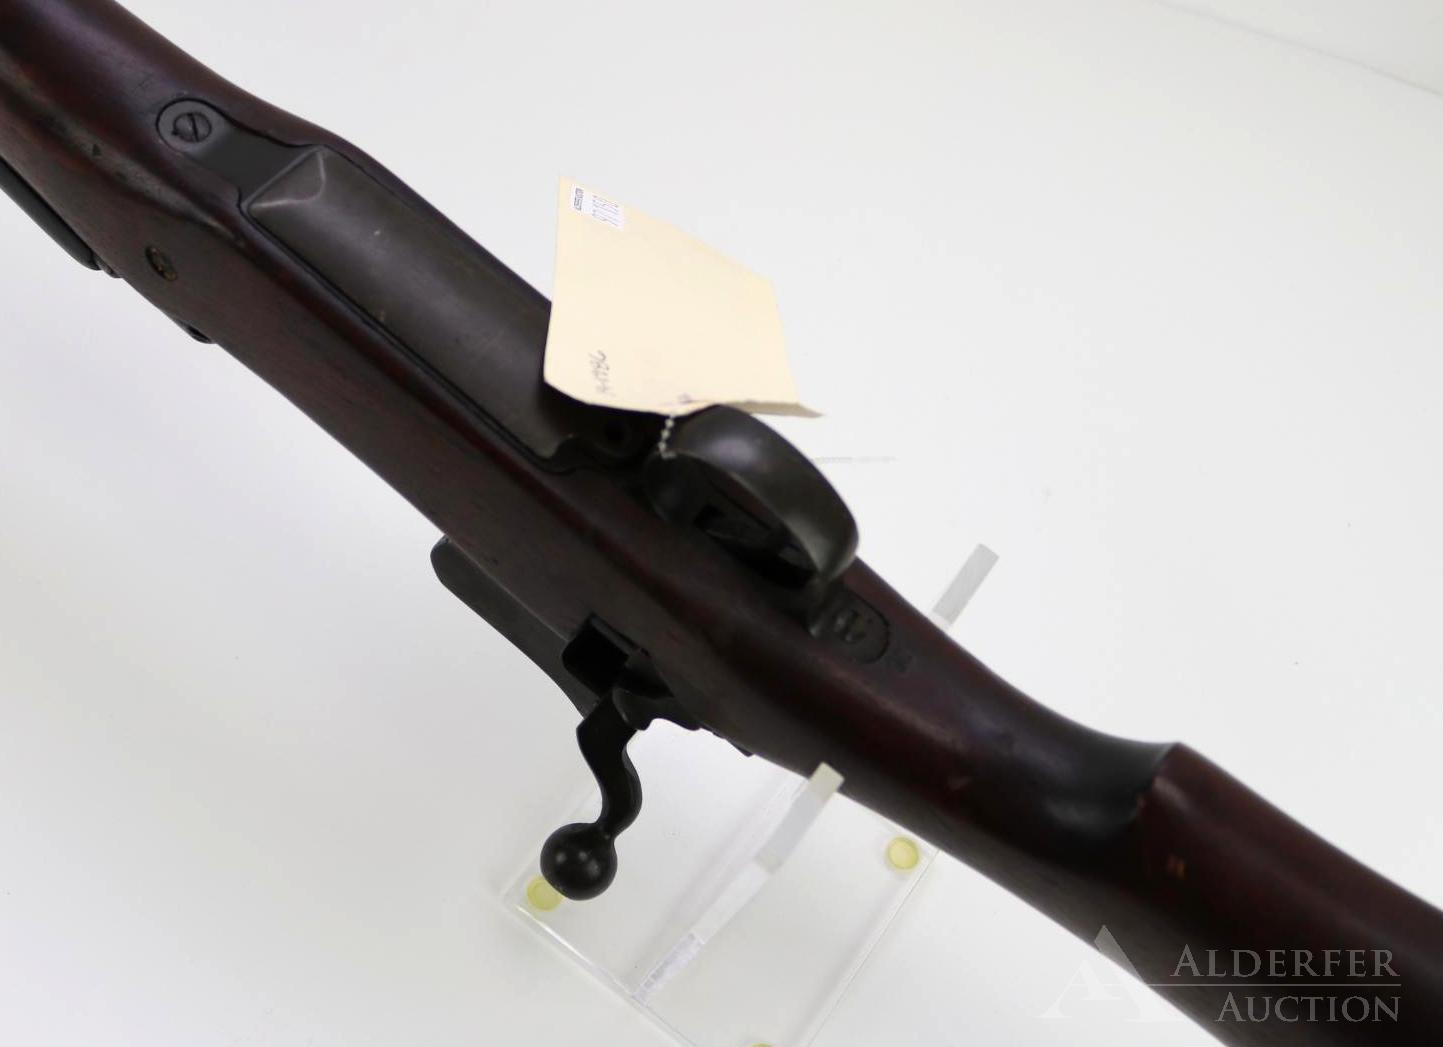 Eddystone 1917 Bolt Action Rifle.